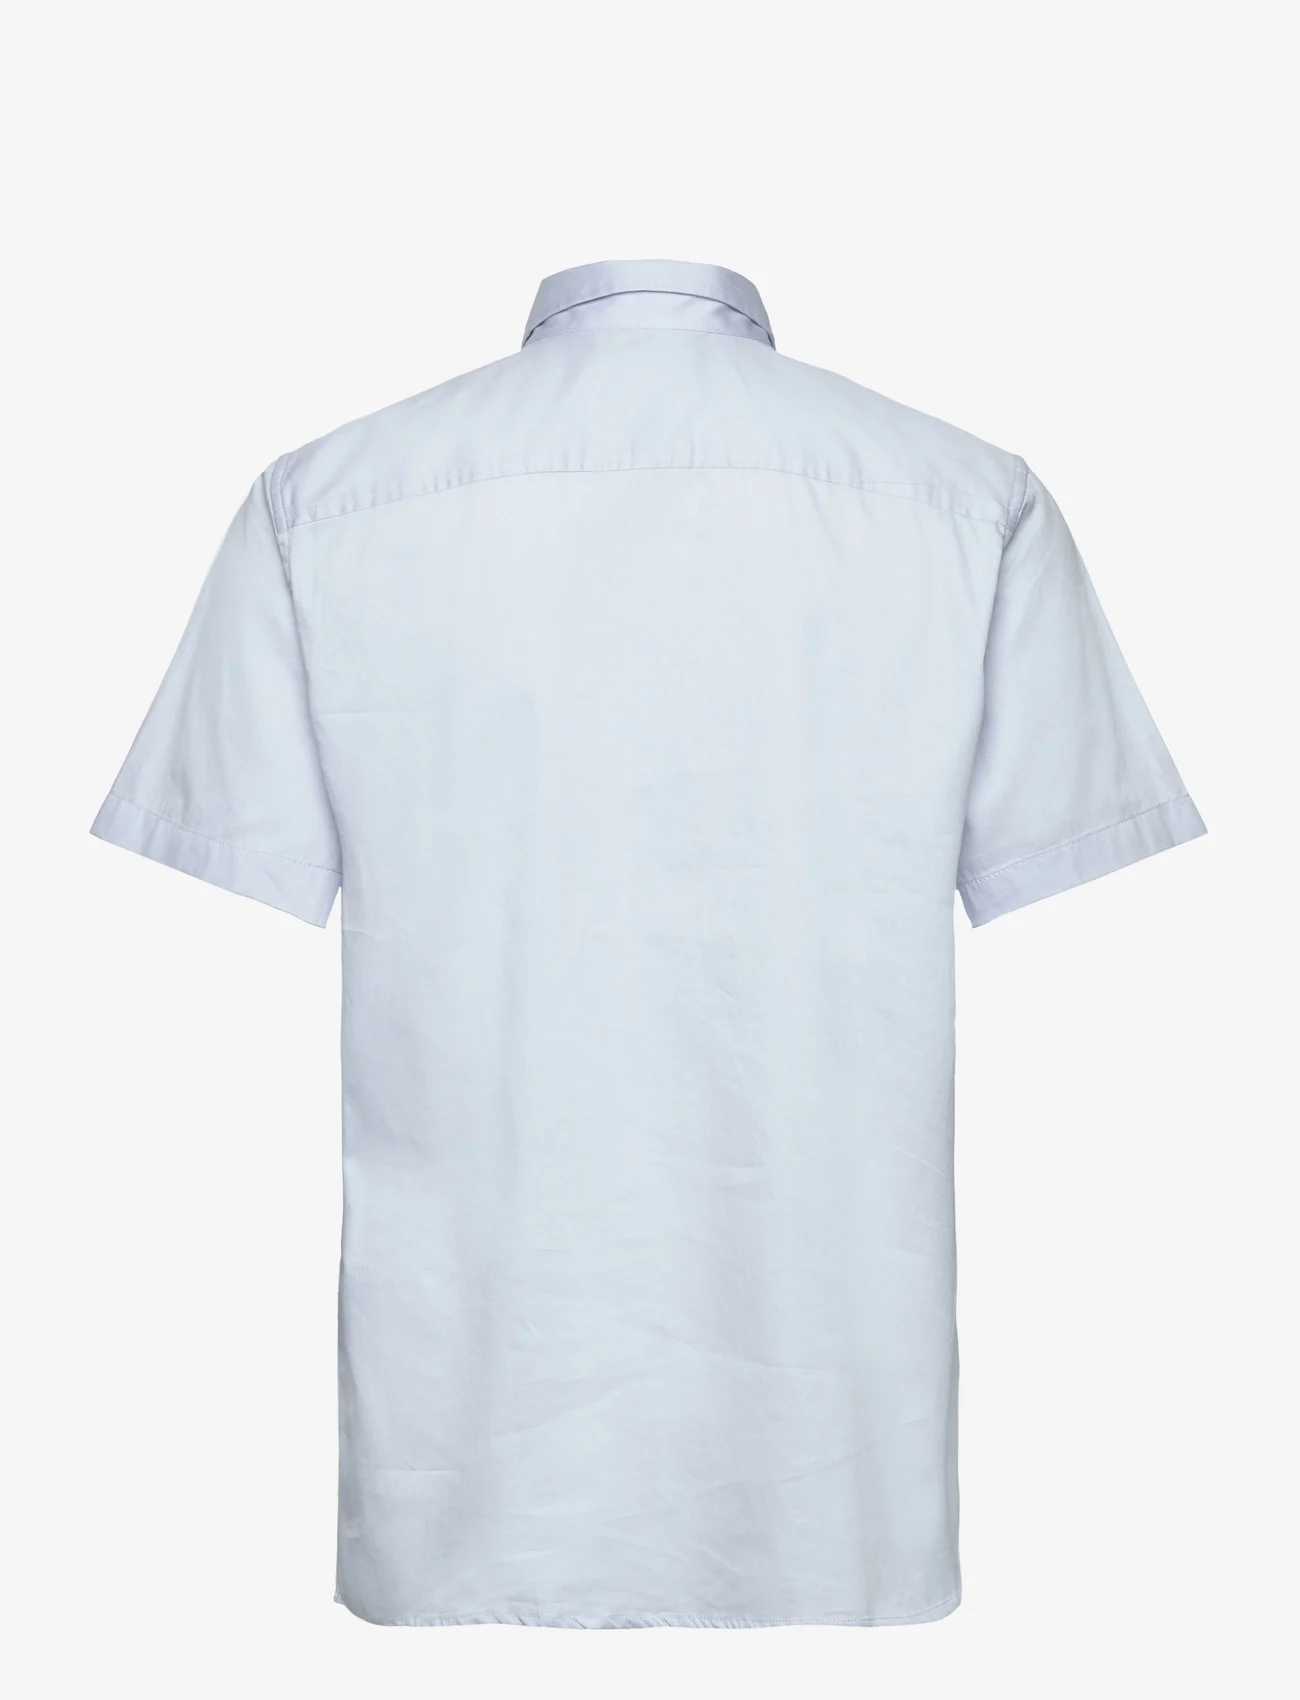 Tom Tailor - bedford shirt - die niedrigsten preise - light metal blue - 1